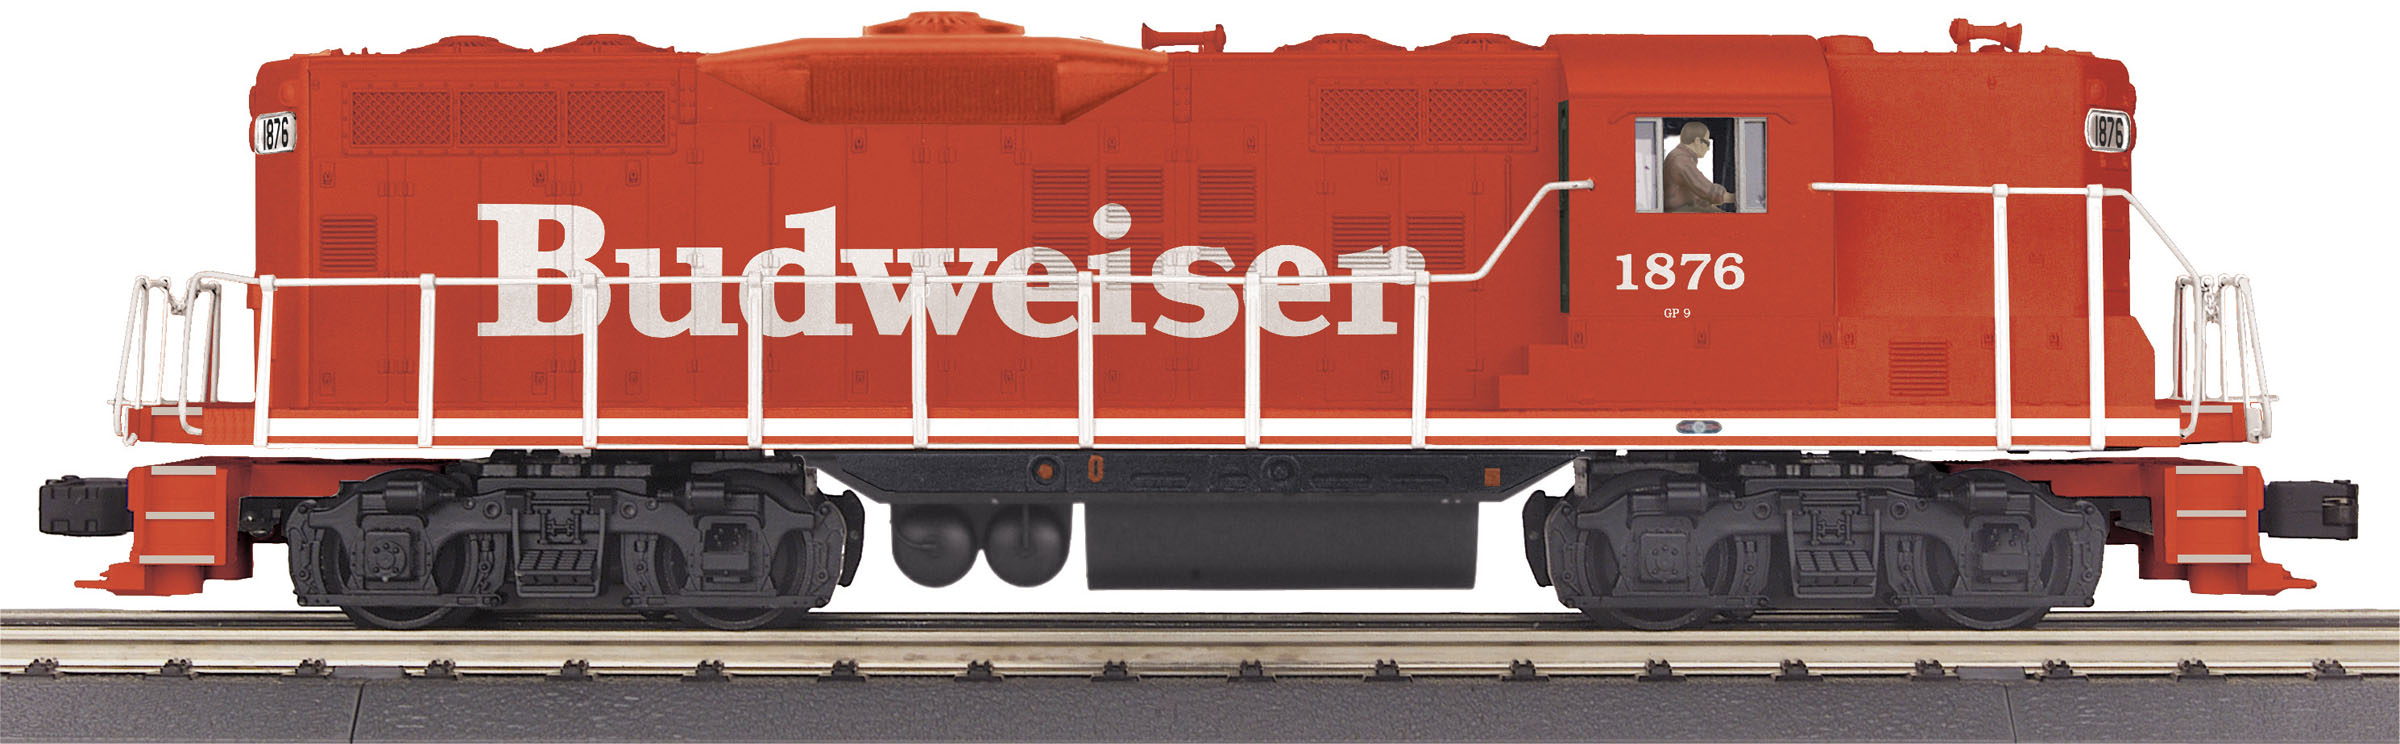 Budweiser GP-9 Diesel Engine image